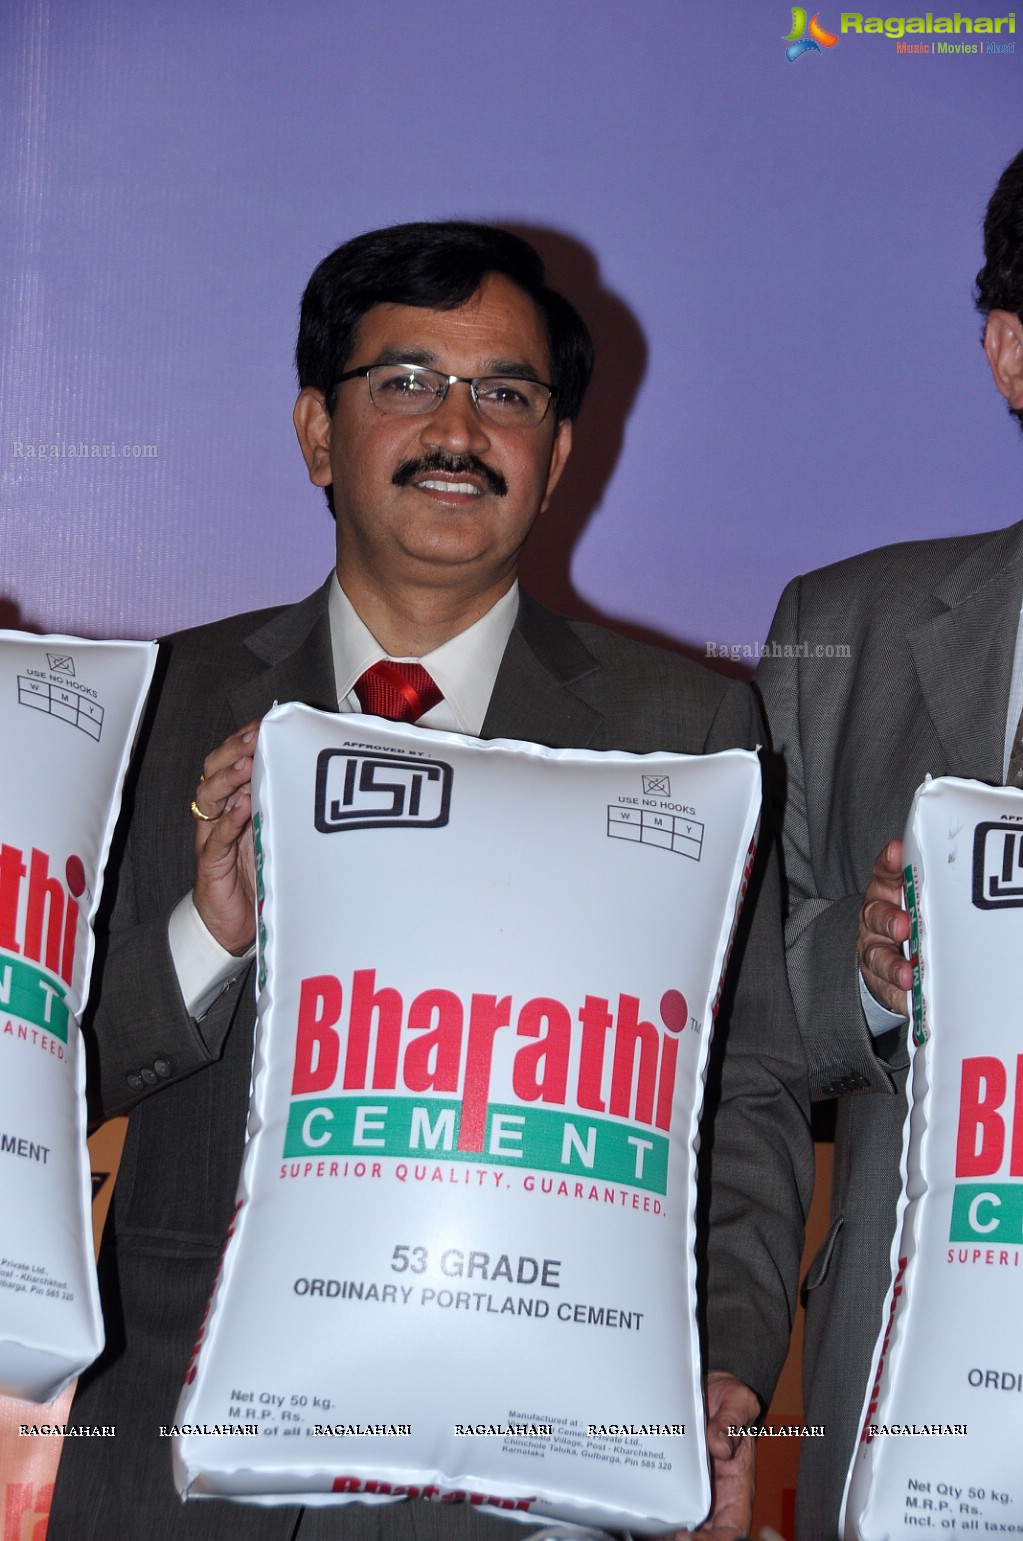 Bharathi Cement launch in the Telangana Region